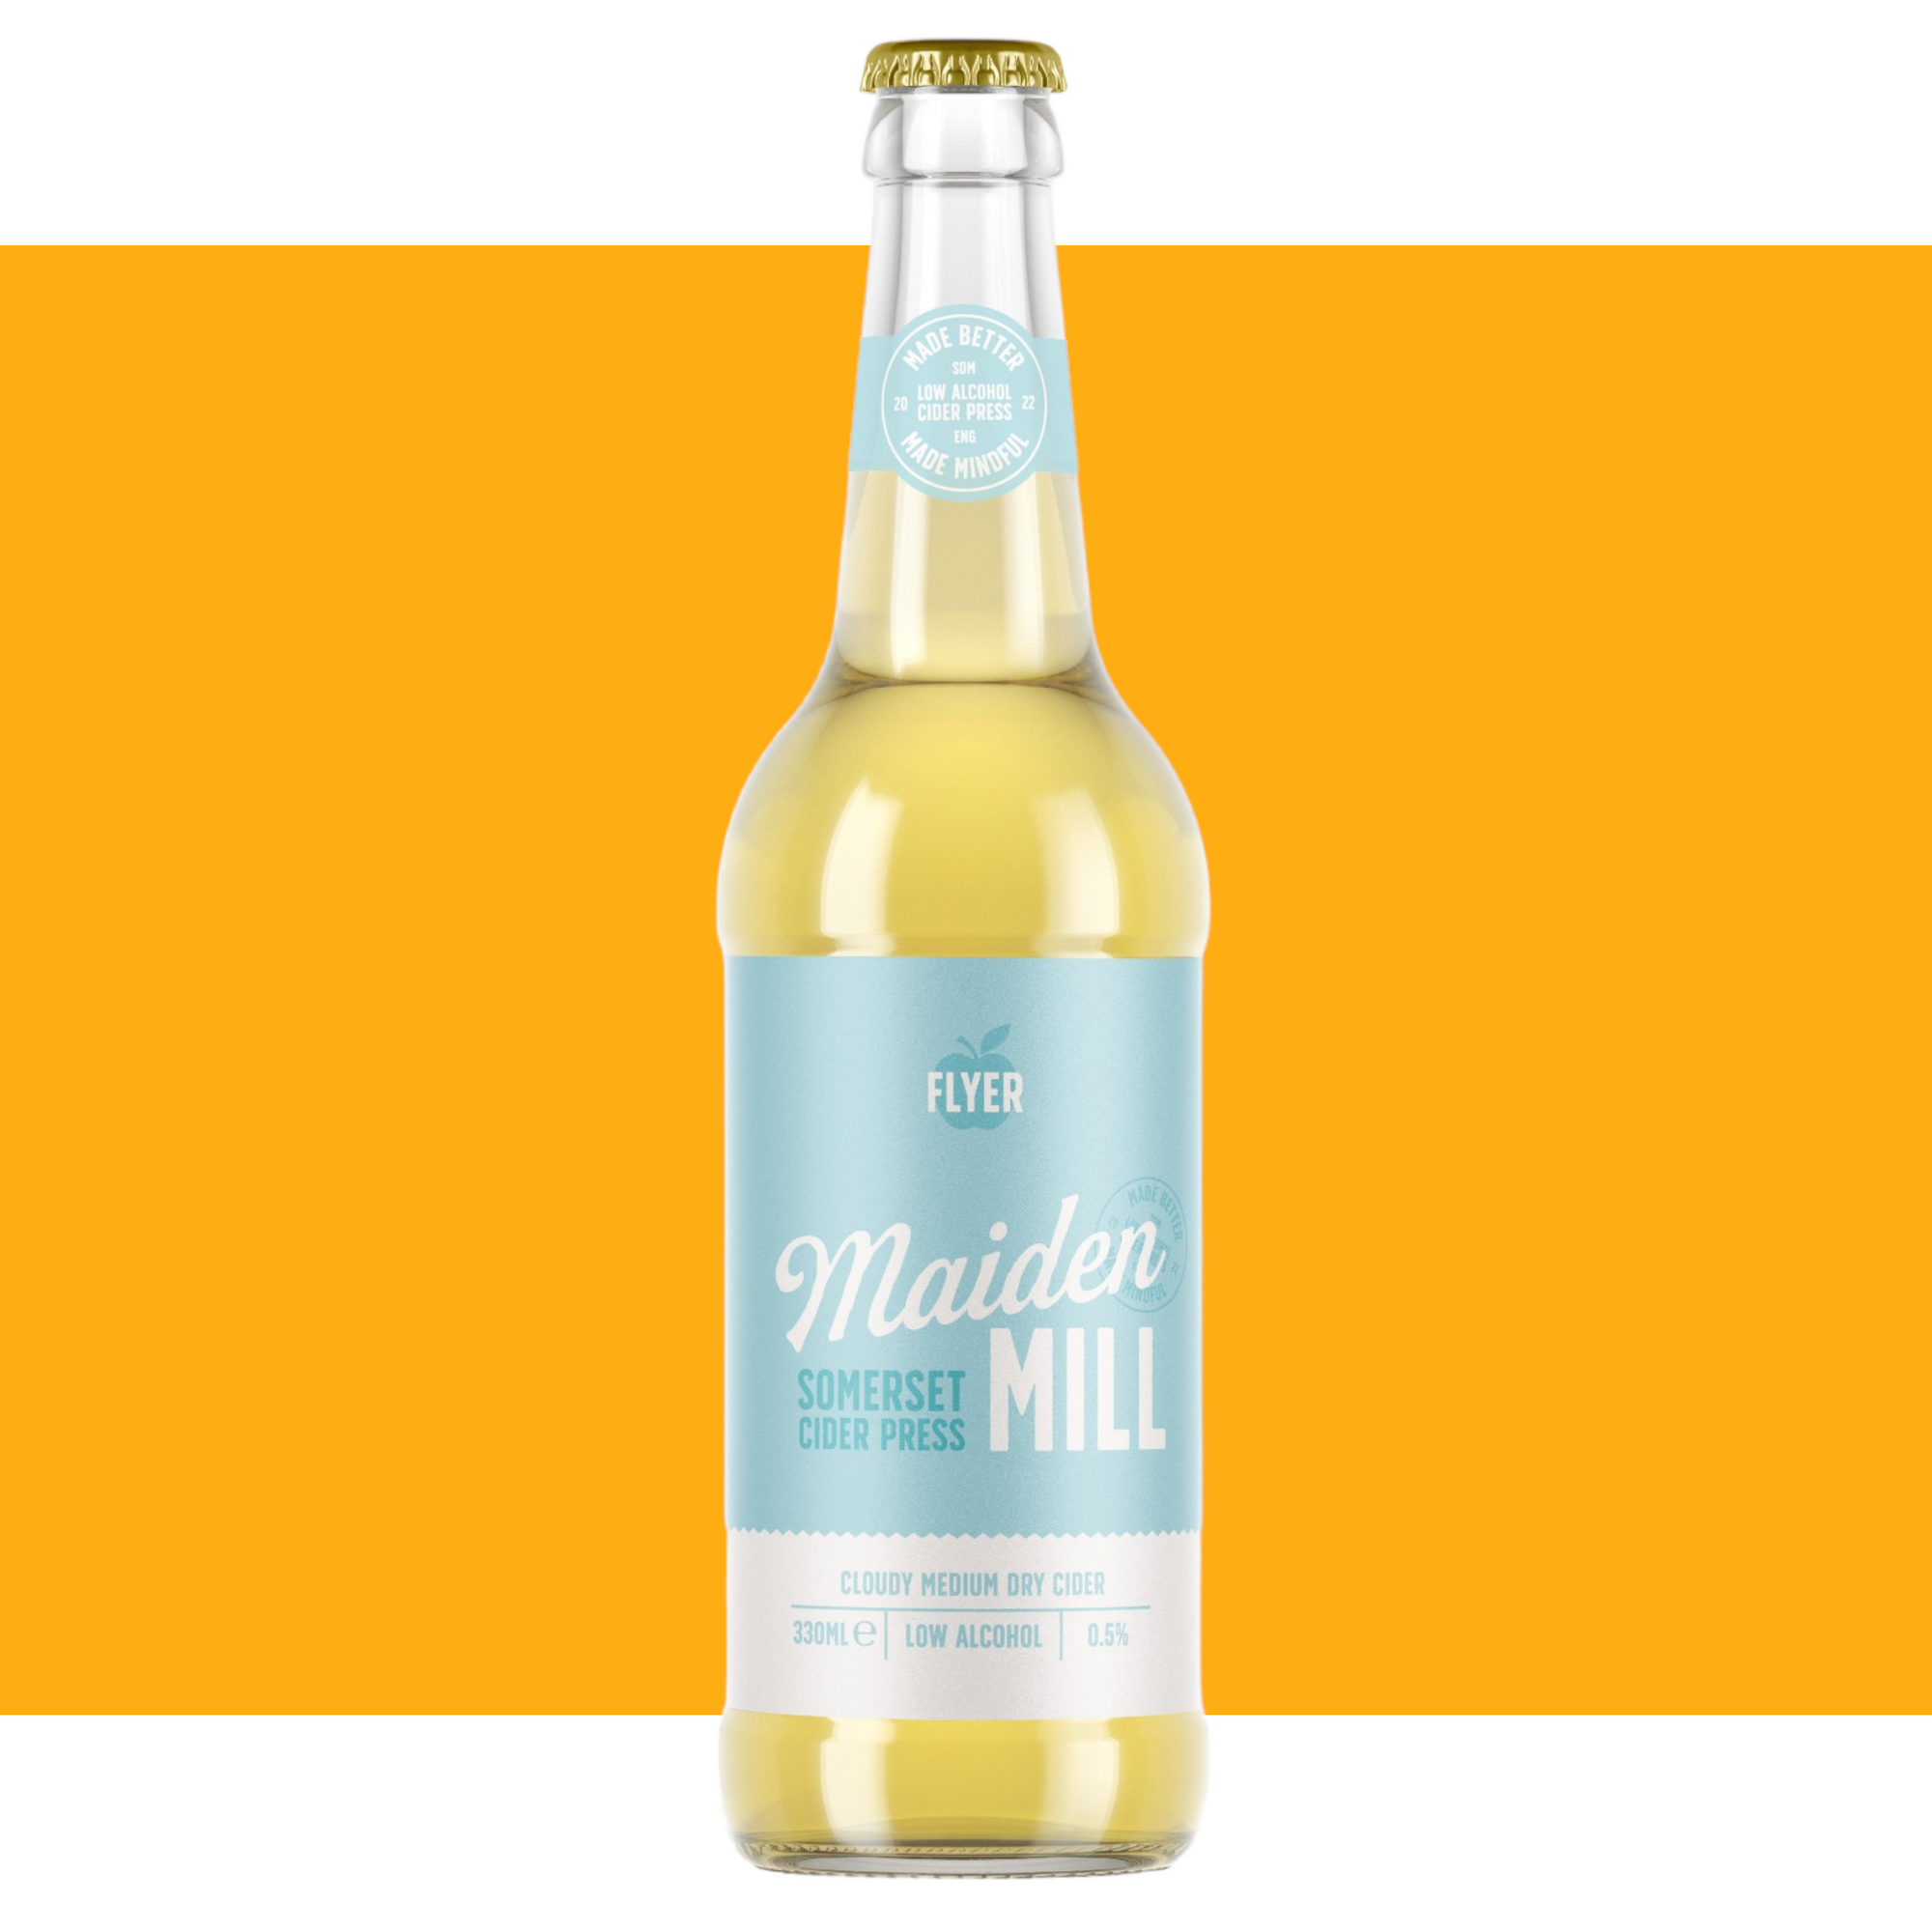 Maiden Mill 'Flyer' Medium Dry Cloudy Somerset 0.5% Craft Cider